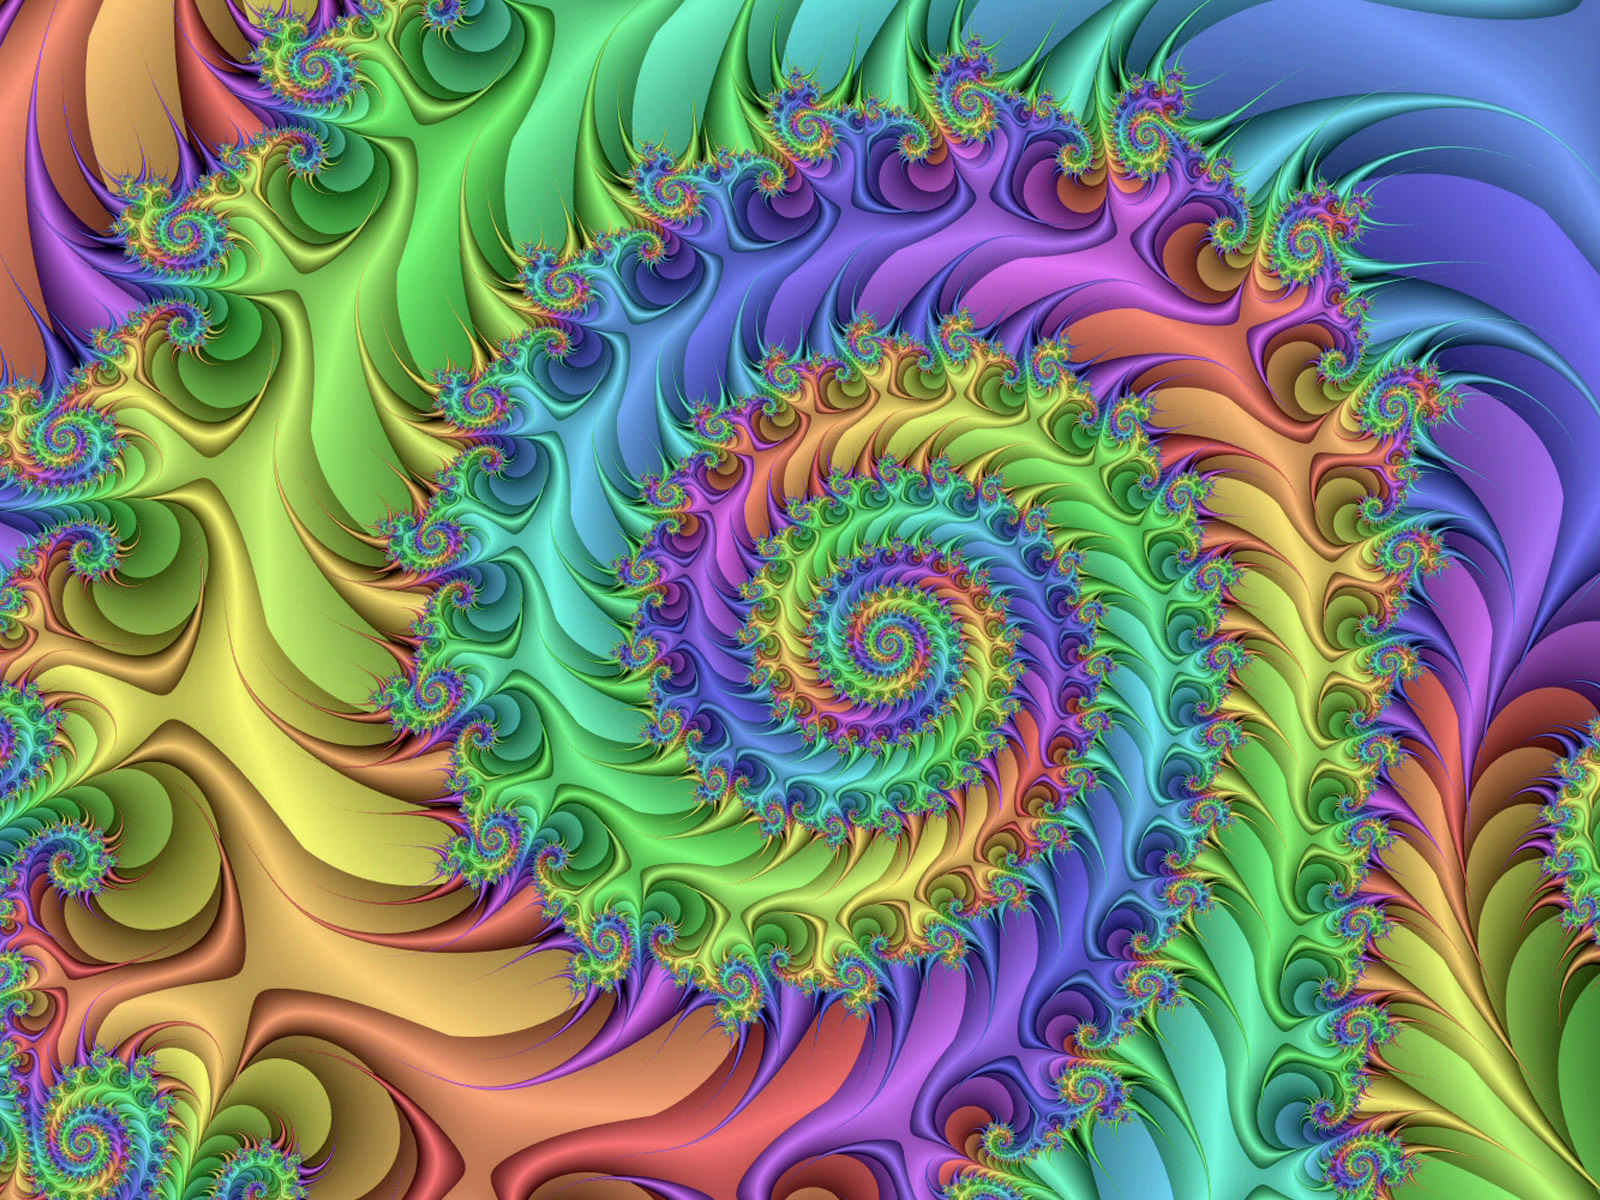 https://blogger.googleusercontent.com/img/b/R29vZ2xl/AVvXsEjUL3aUM4hG1mI2AfKzAiu-A_JUNpYB0G5-qxlYmTxLM0RIosveH4ldWoMQzdHz9BZoqyw0PQSkTjysAqm4bPVaylvtcngIliv7omVpJnR3Z9u3h5BzoabJ3KATbzGV992qNWLkLZyMHdw/s1600/Trippy-Colorful-Spiral-Wallpaper.jpg